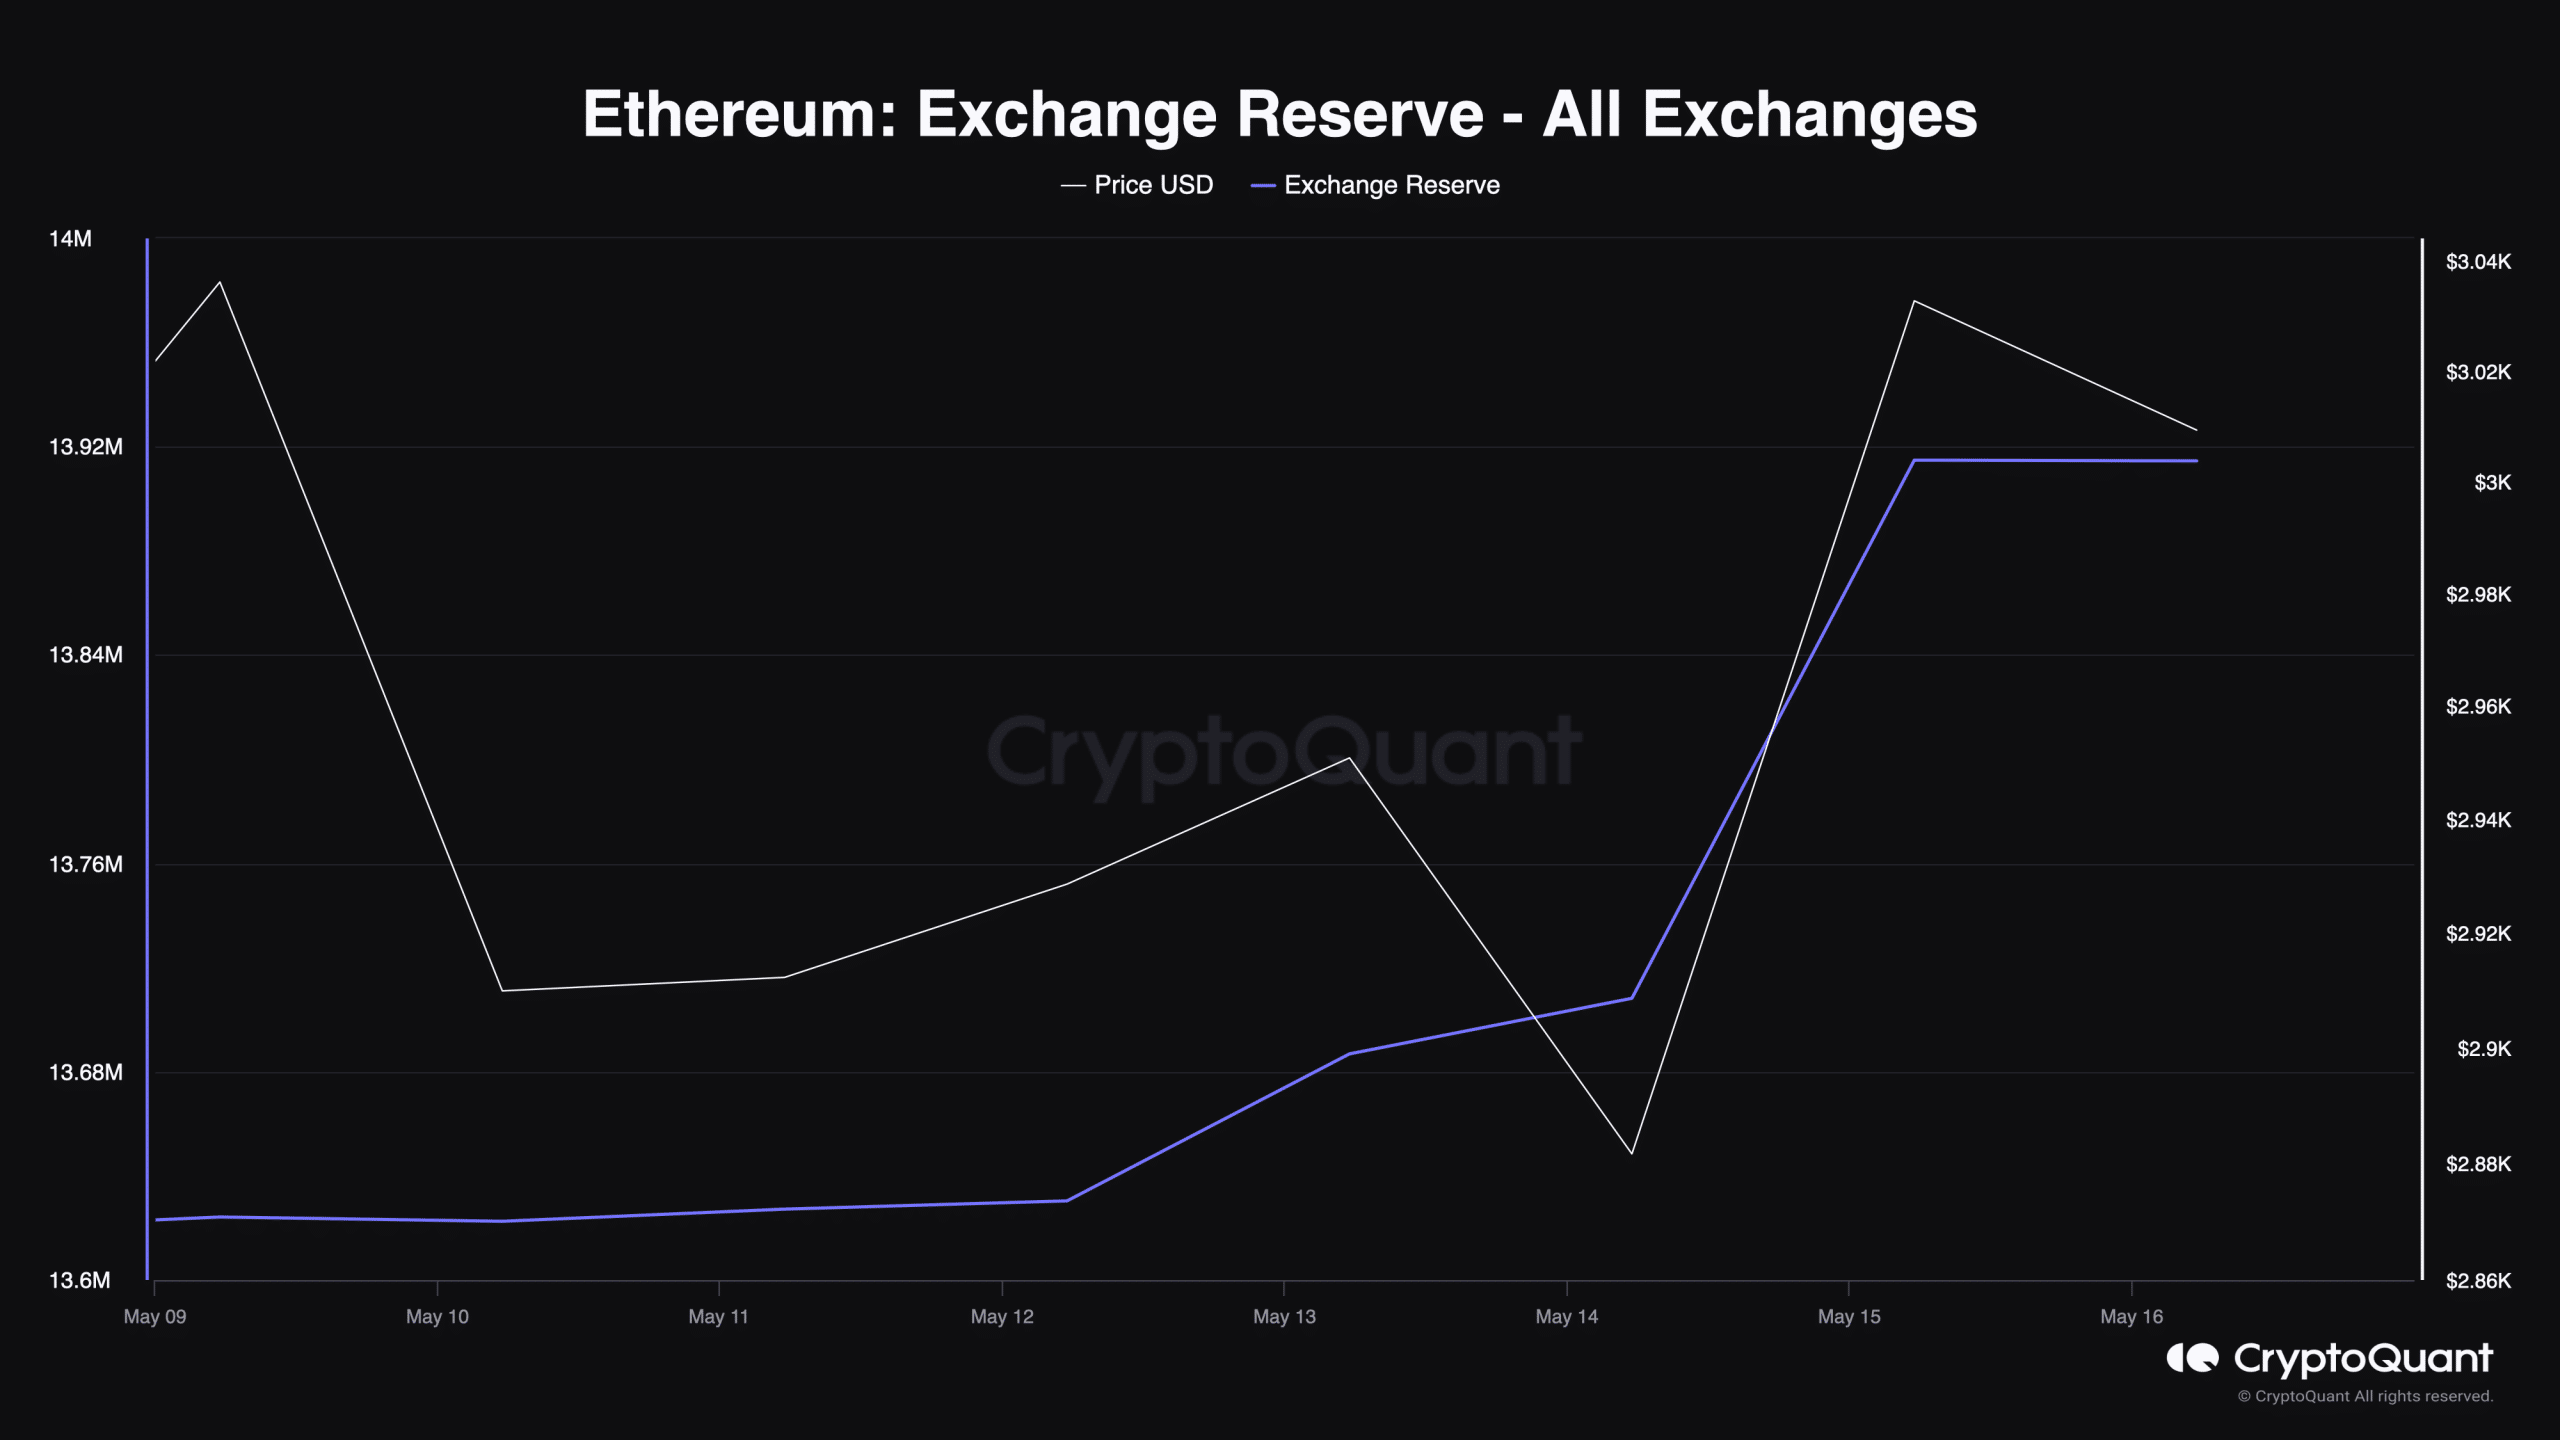 Ethereum's exchange reserve increased